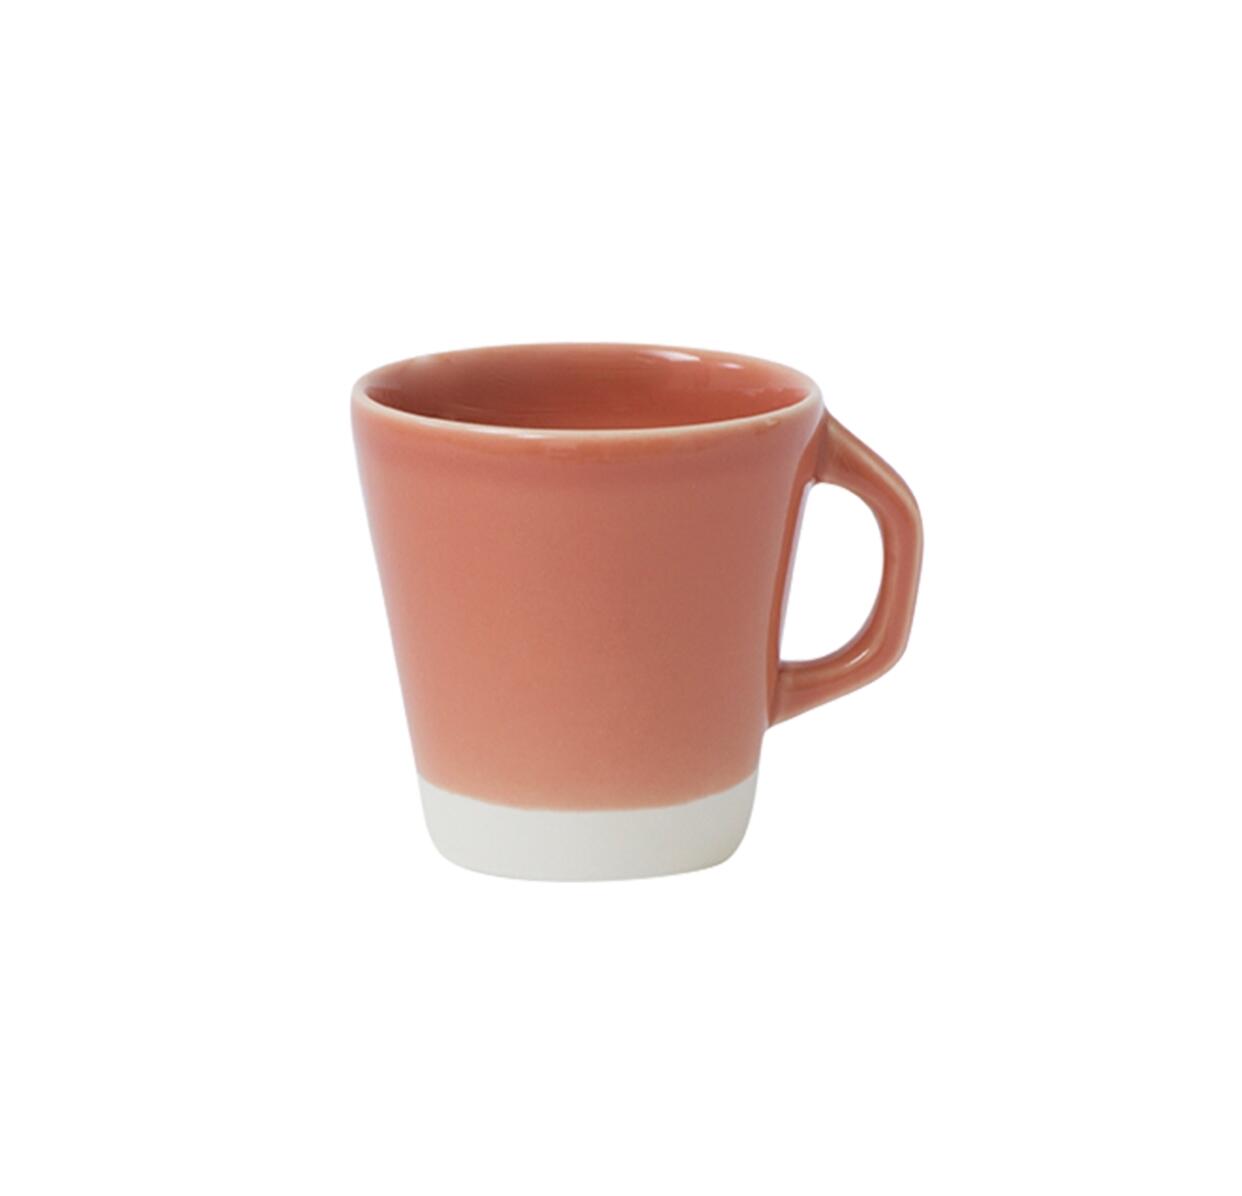 Buy handmade ceramic mug by French manufacturer Jars